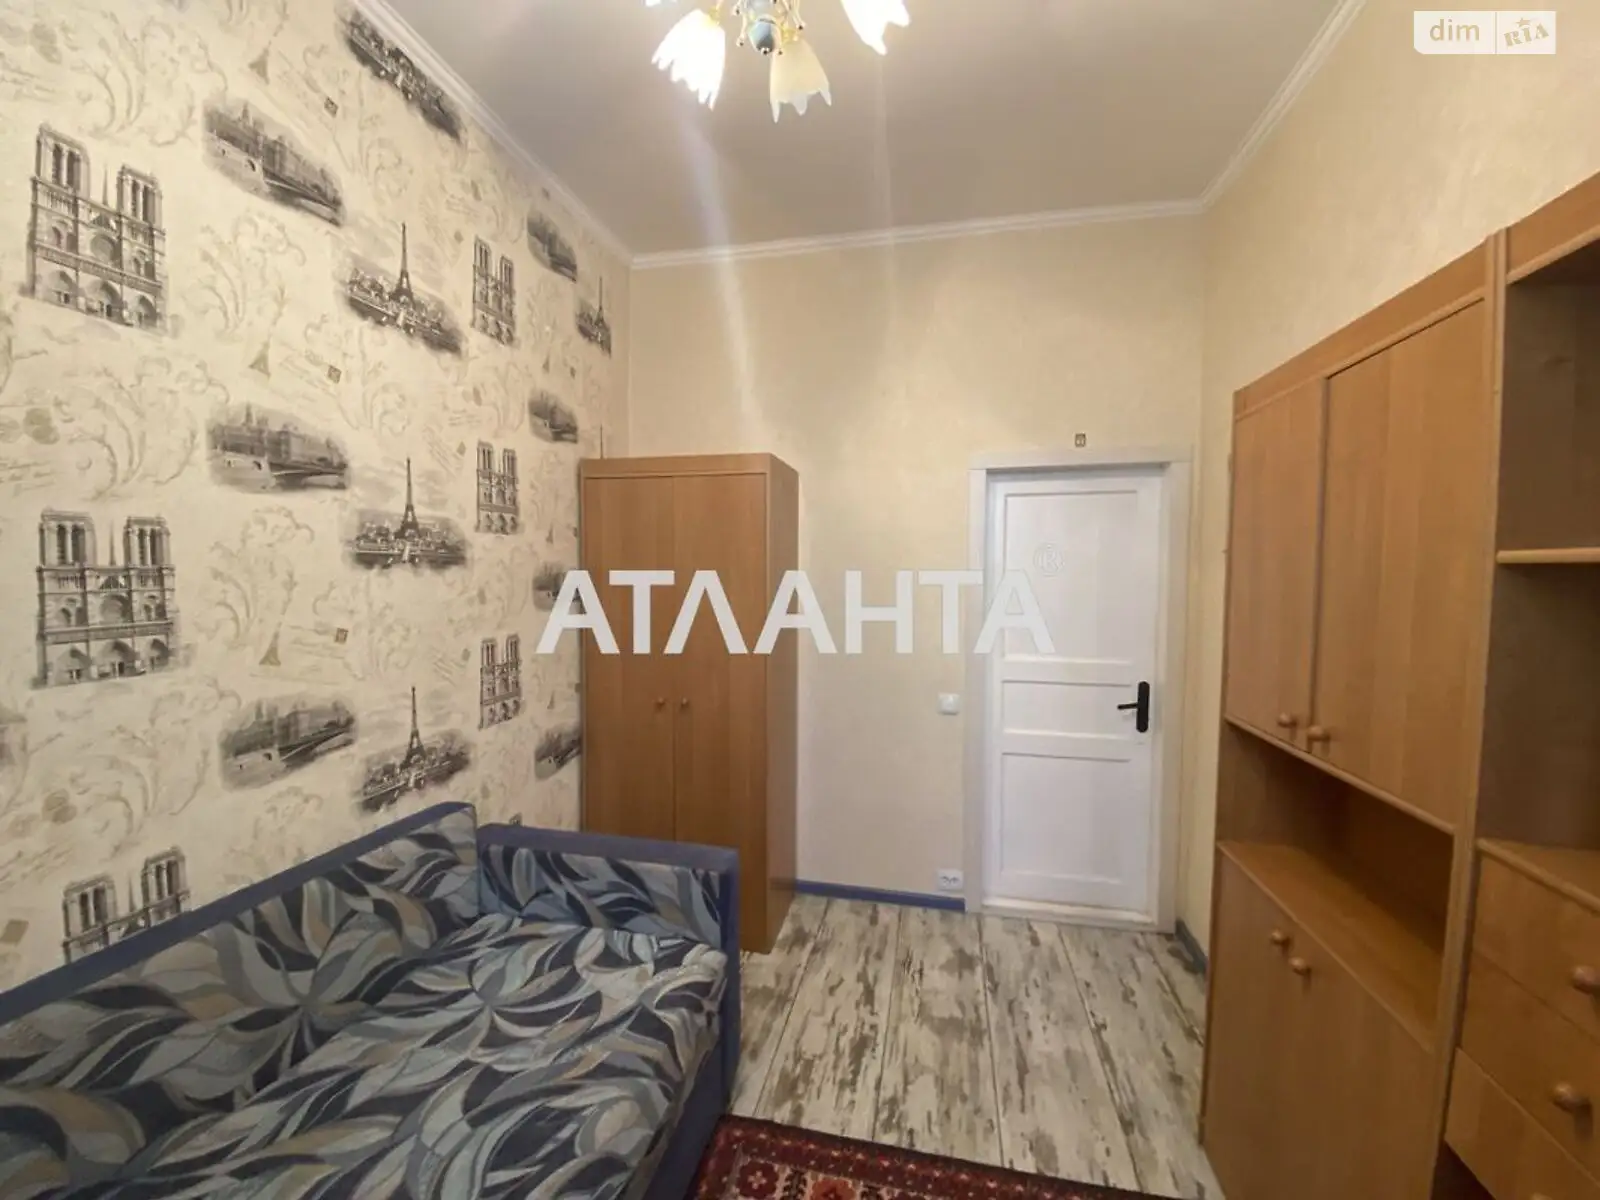 Продается комната 45.7 кв. м в Одессе, цена: 18000 $ - фото 1